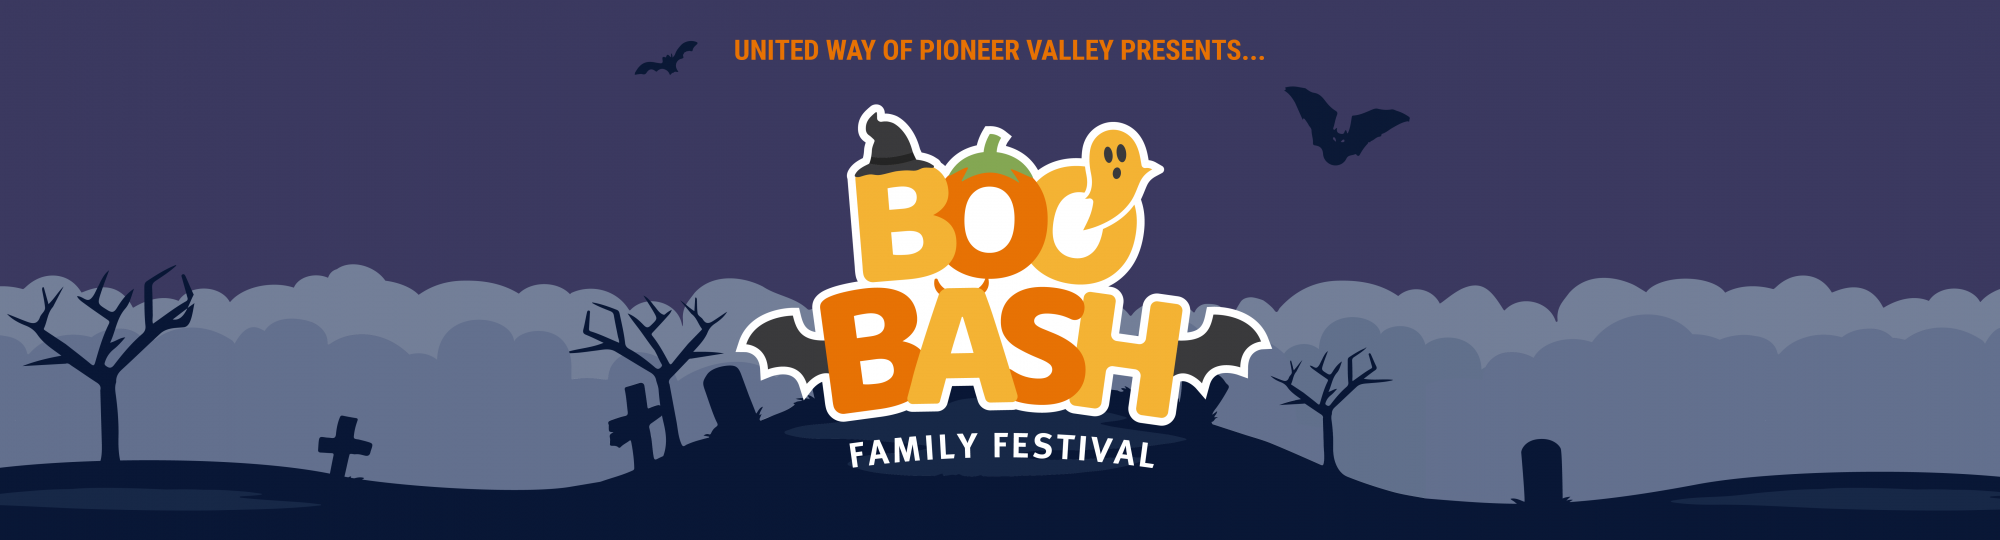 Boo Bash Family Festival logo